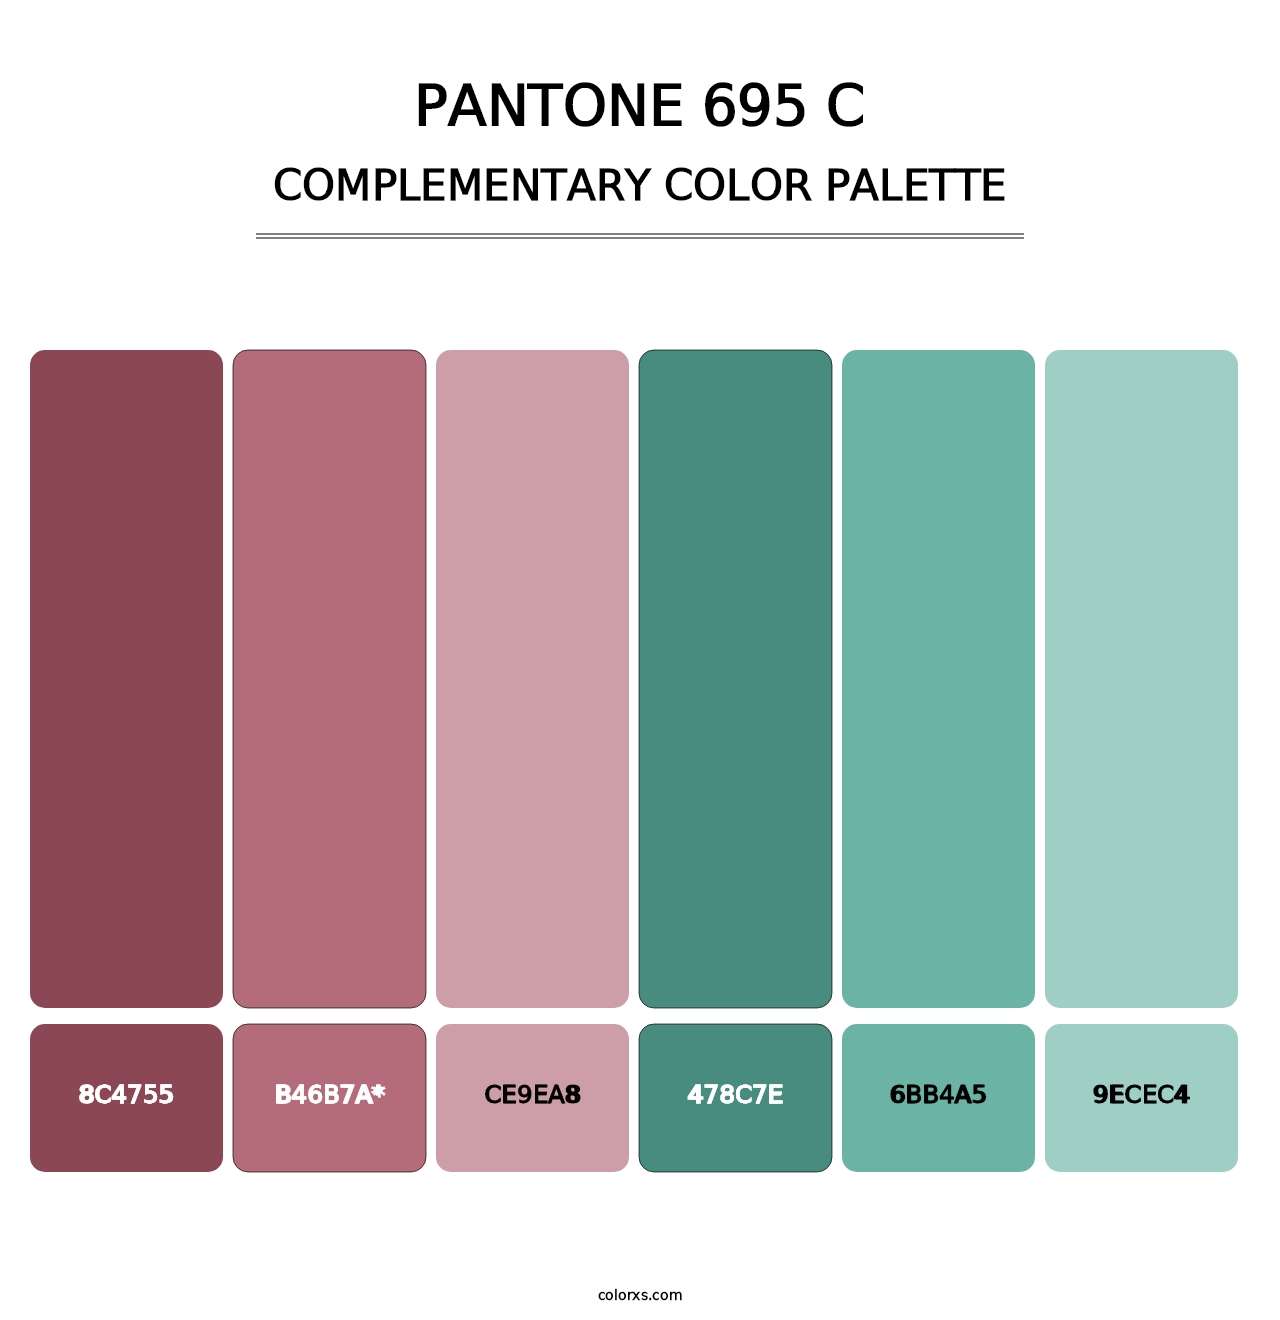 PANTONE 695 C - Complementary Color Palette